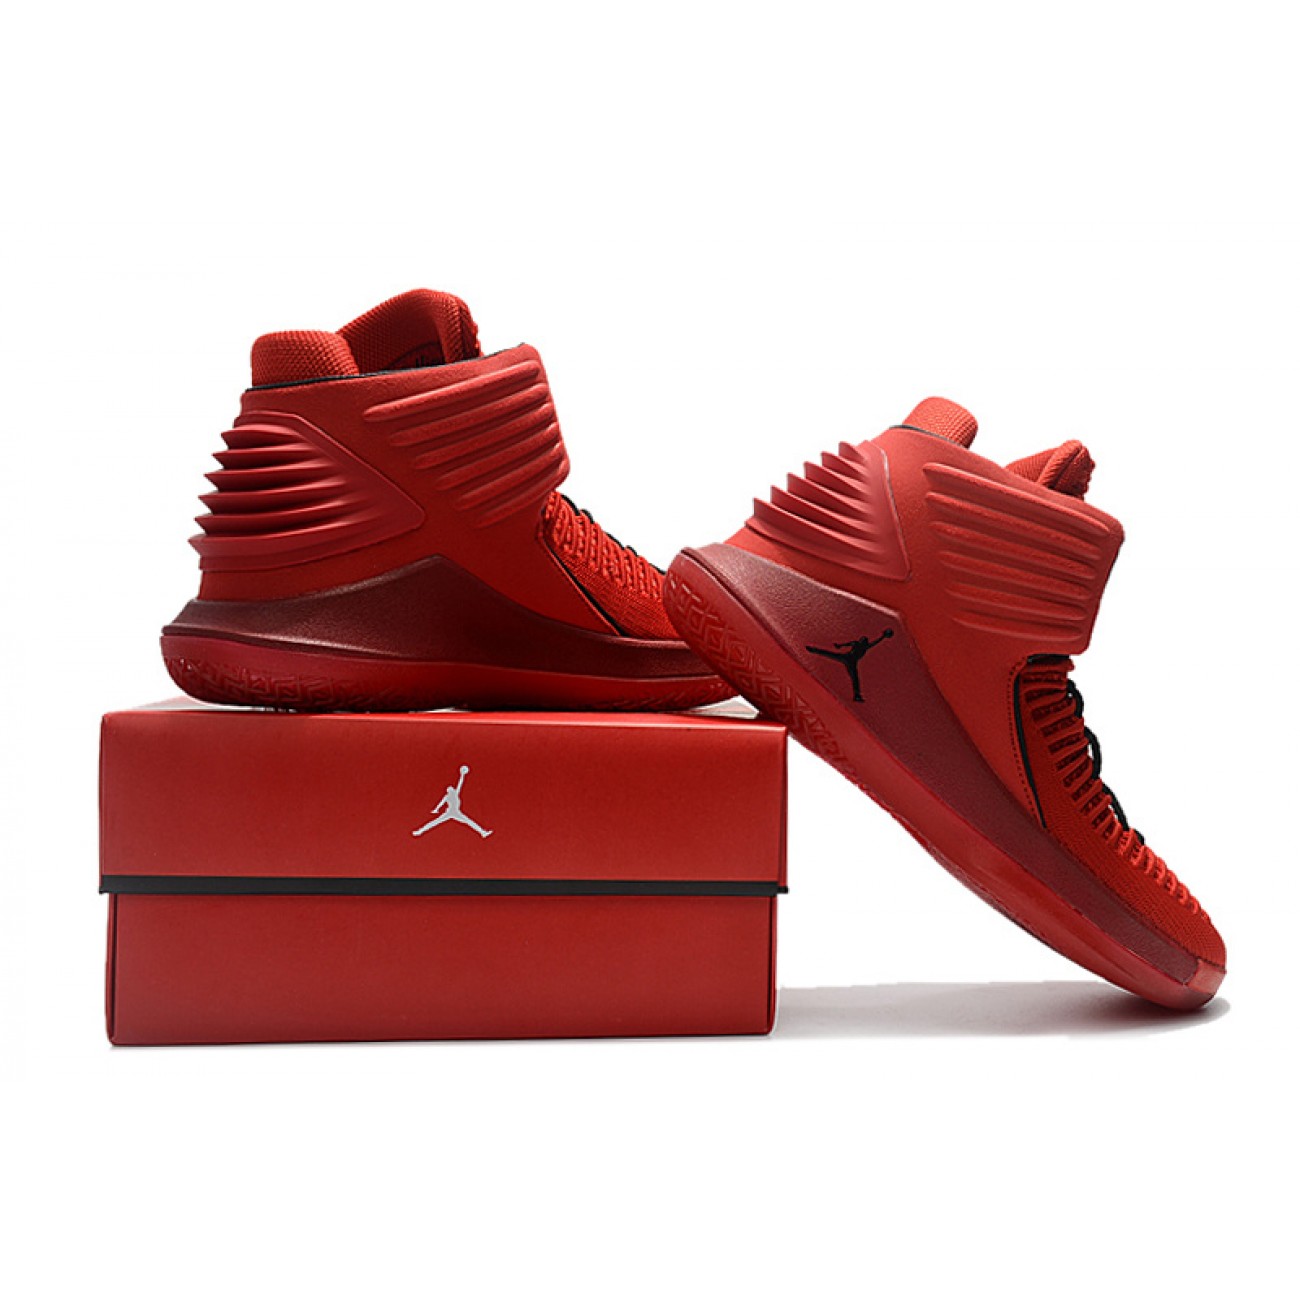 Air Jordan 32 XXXII Red